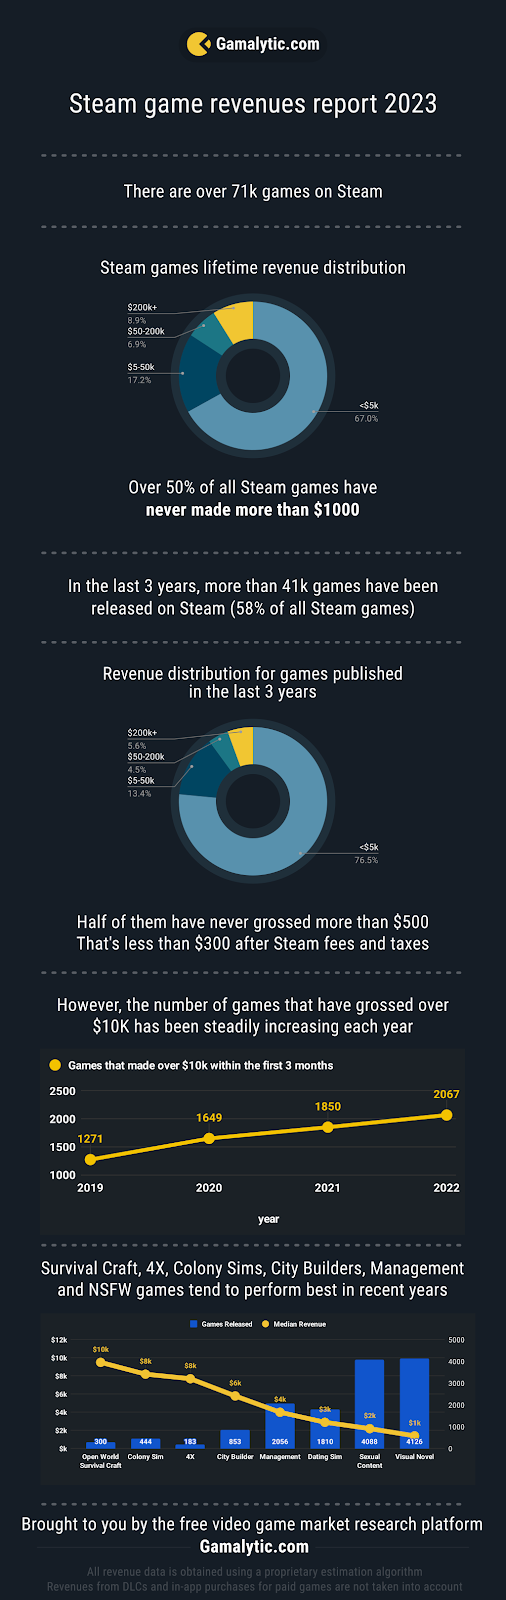 Steam game revenues 2023